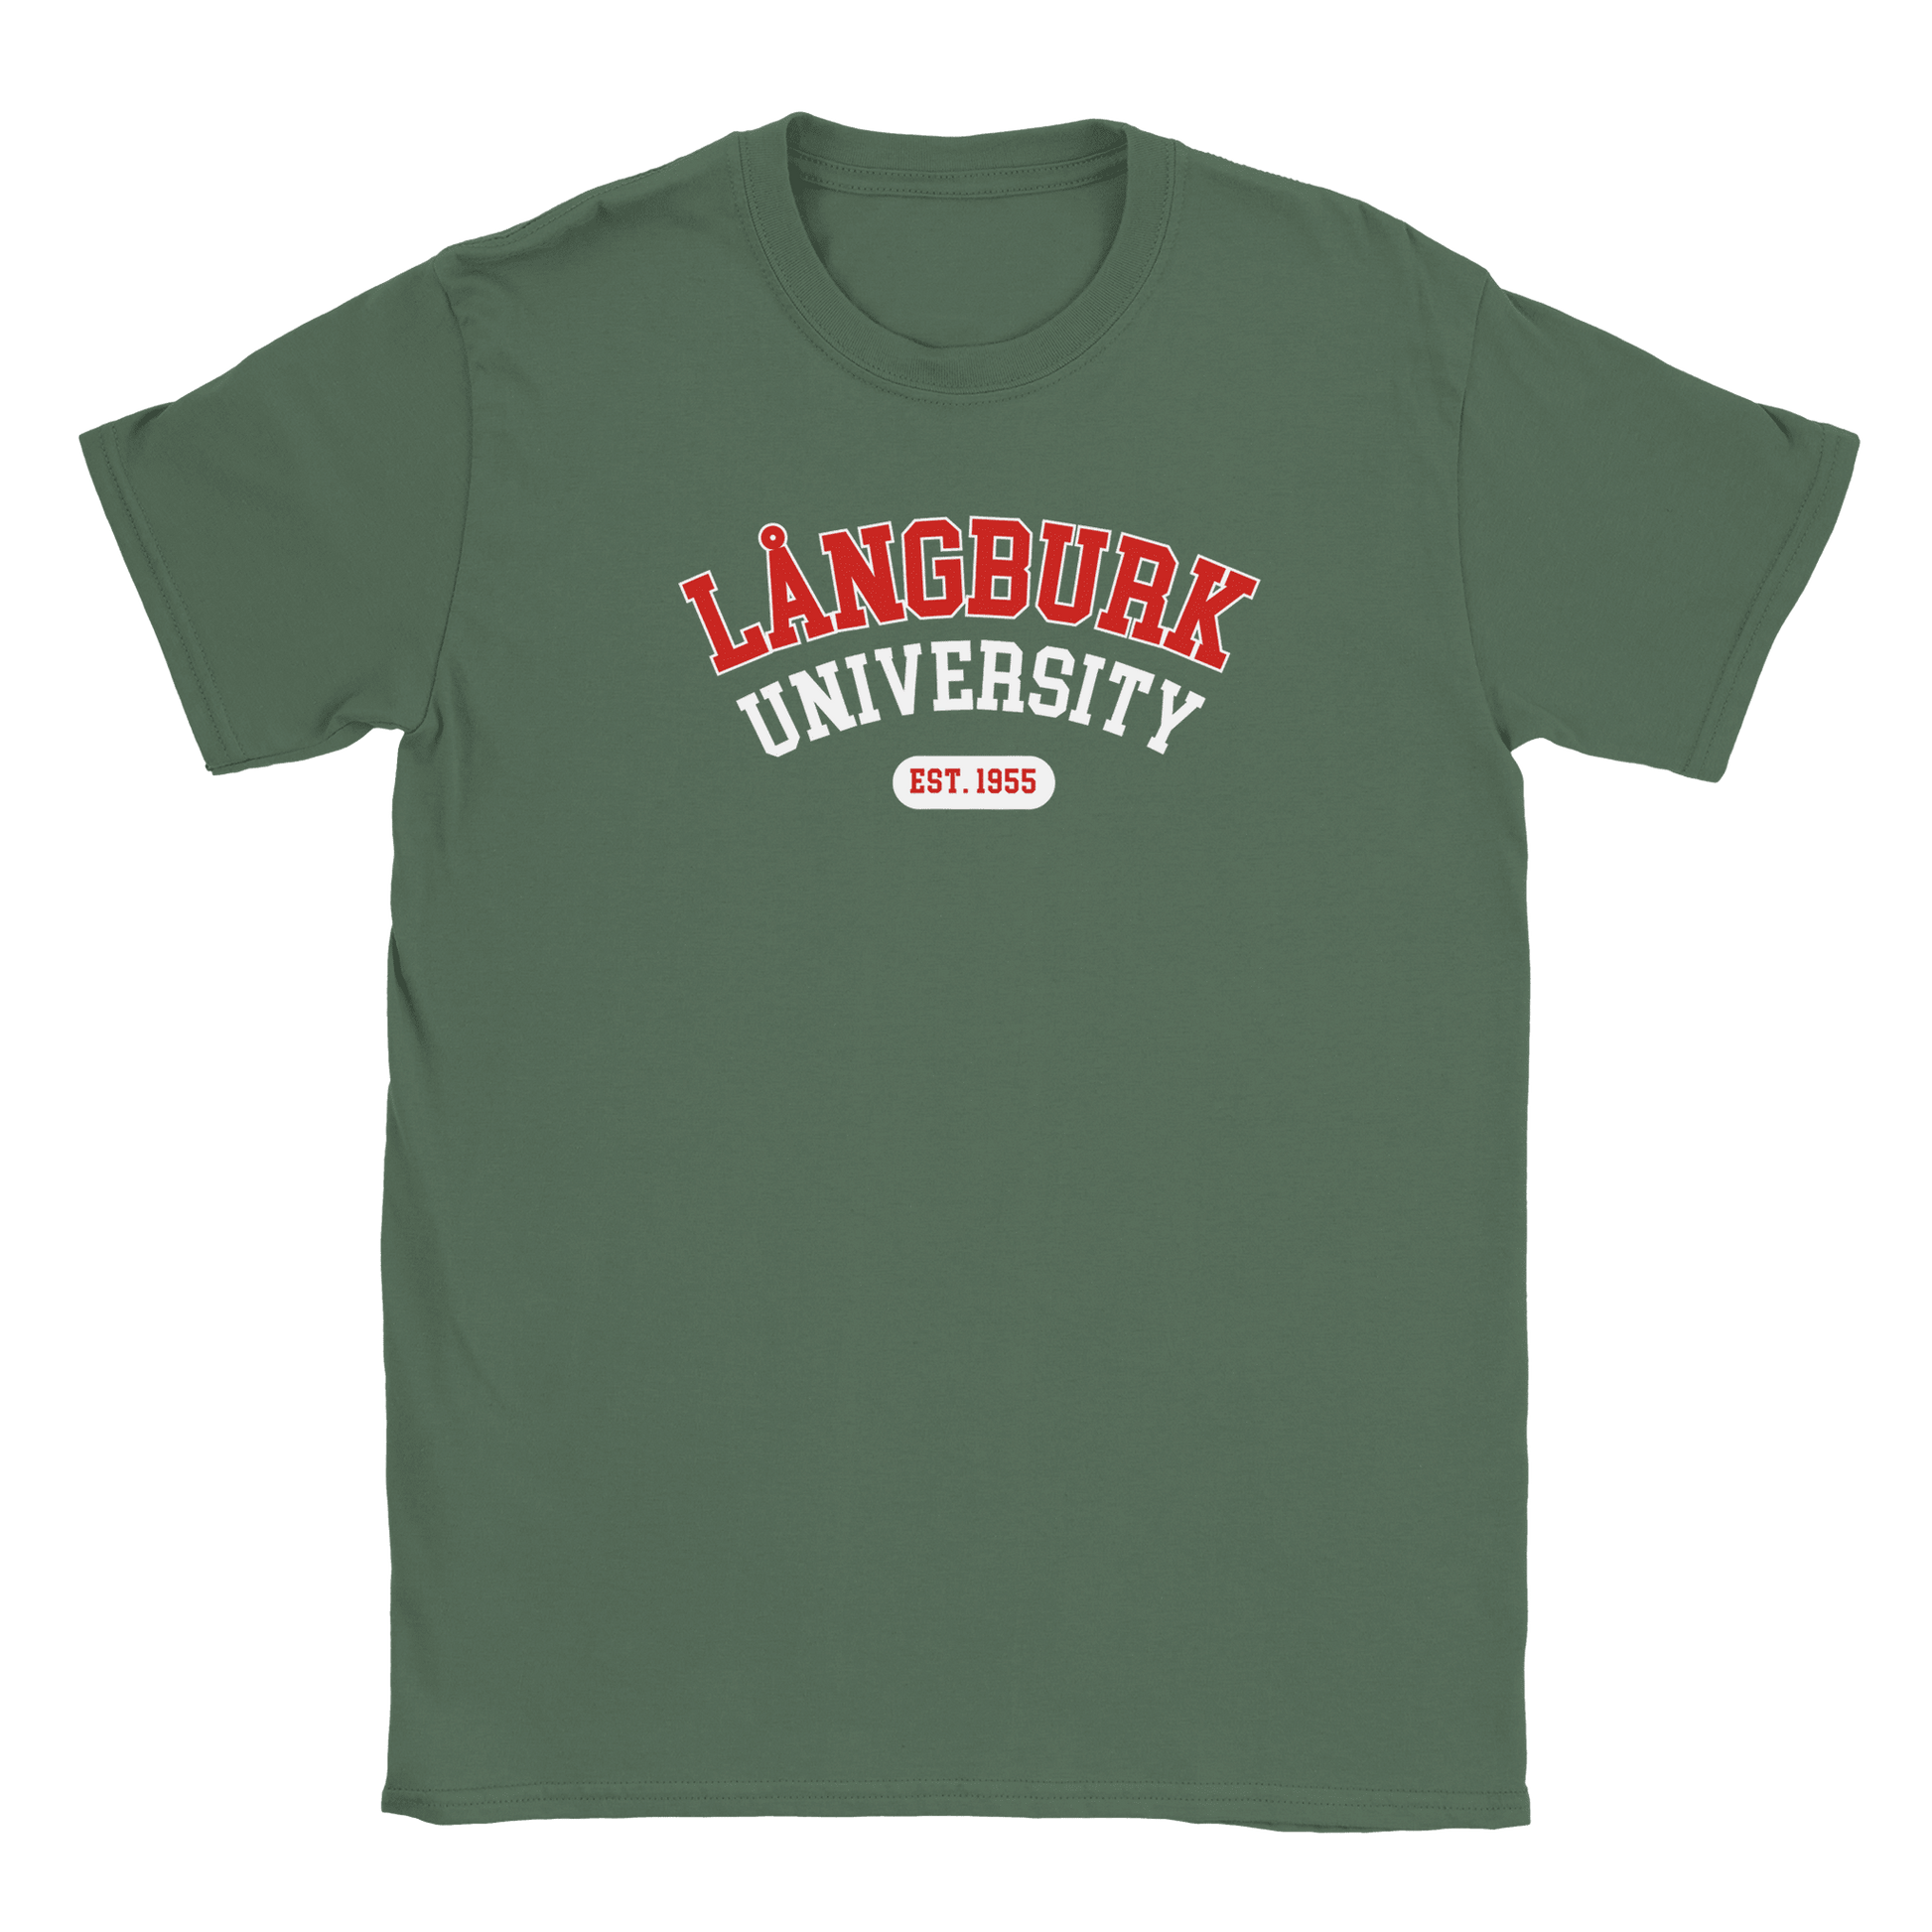 Långburk University Est. 1955 - T-shirt Militärgrön